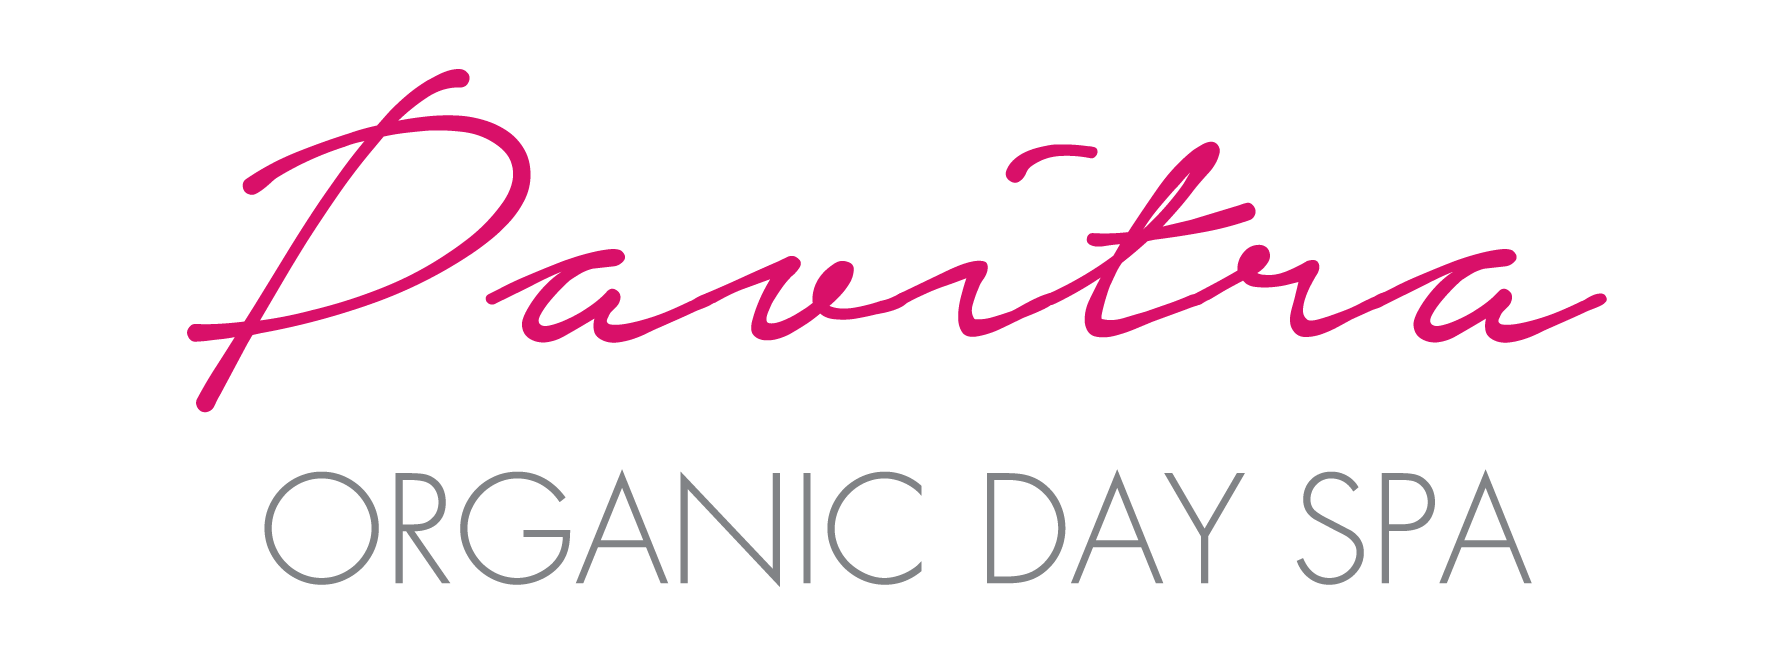 Pavitra Organic Day Spa